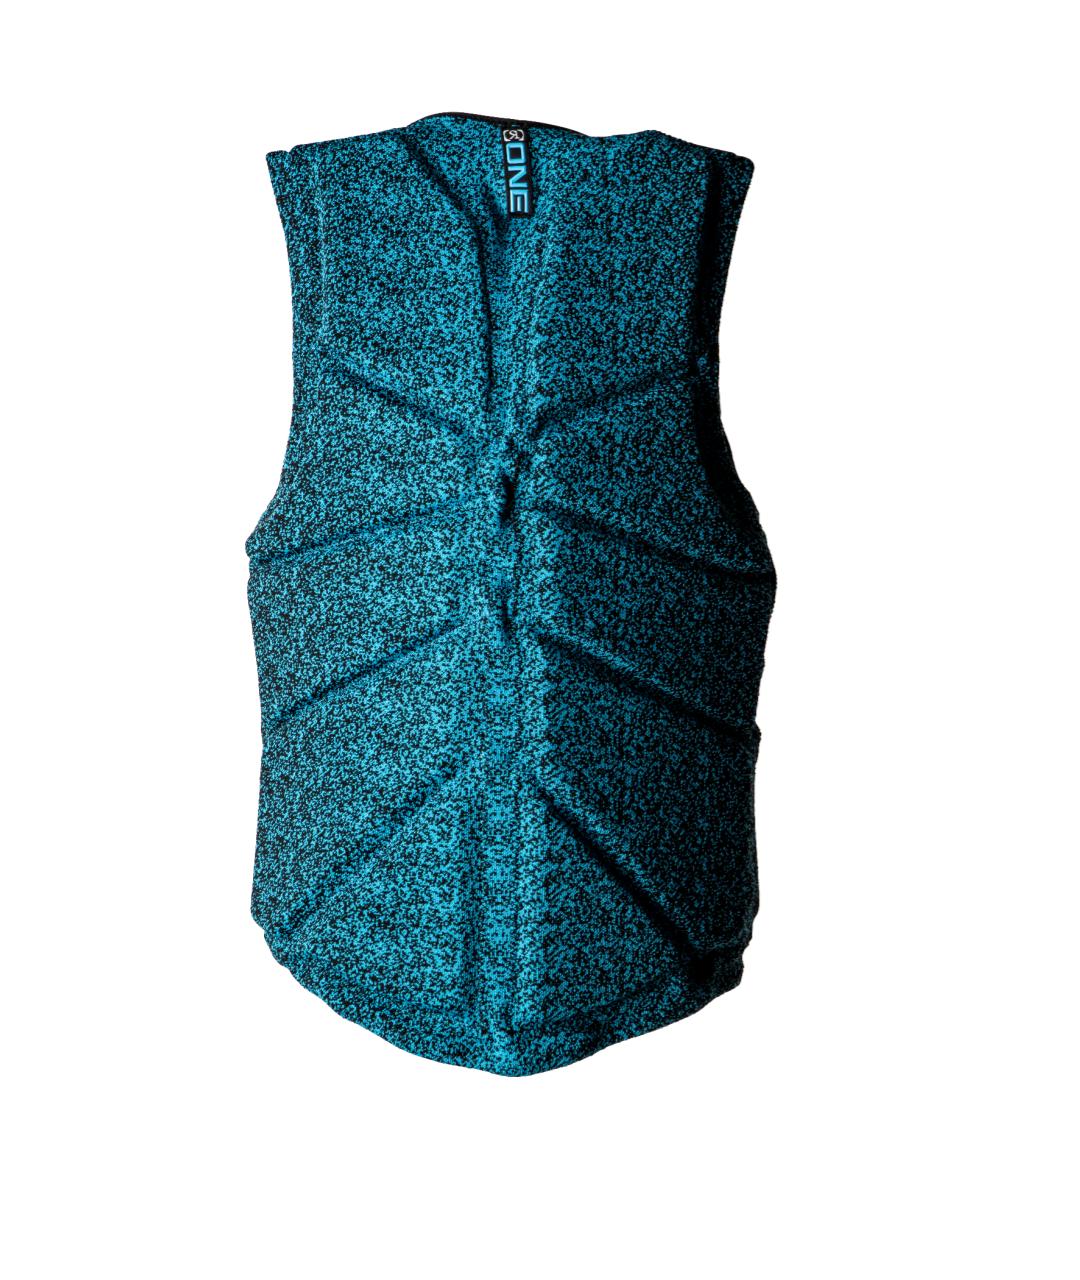 One - Impact Vest - Engineered Digital Azure Blue